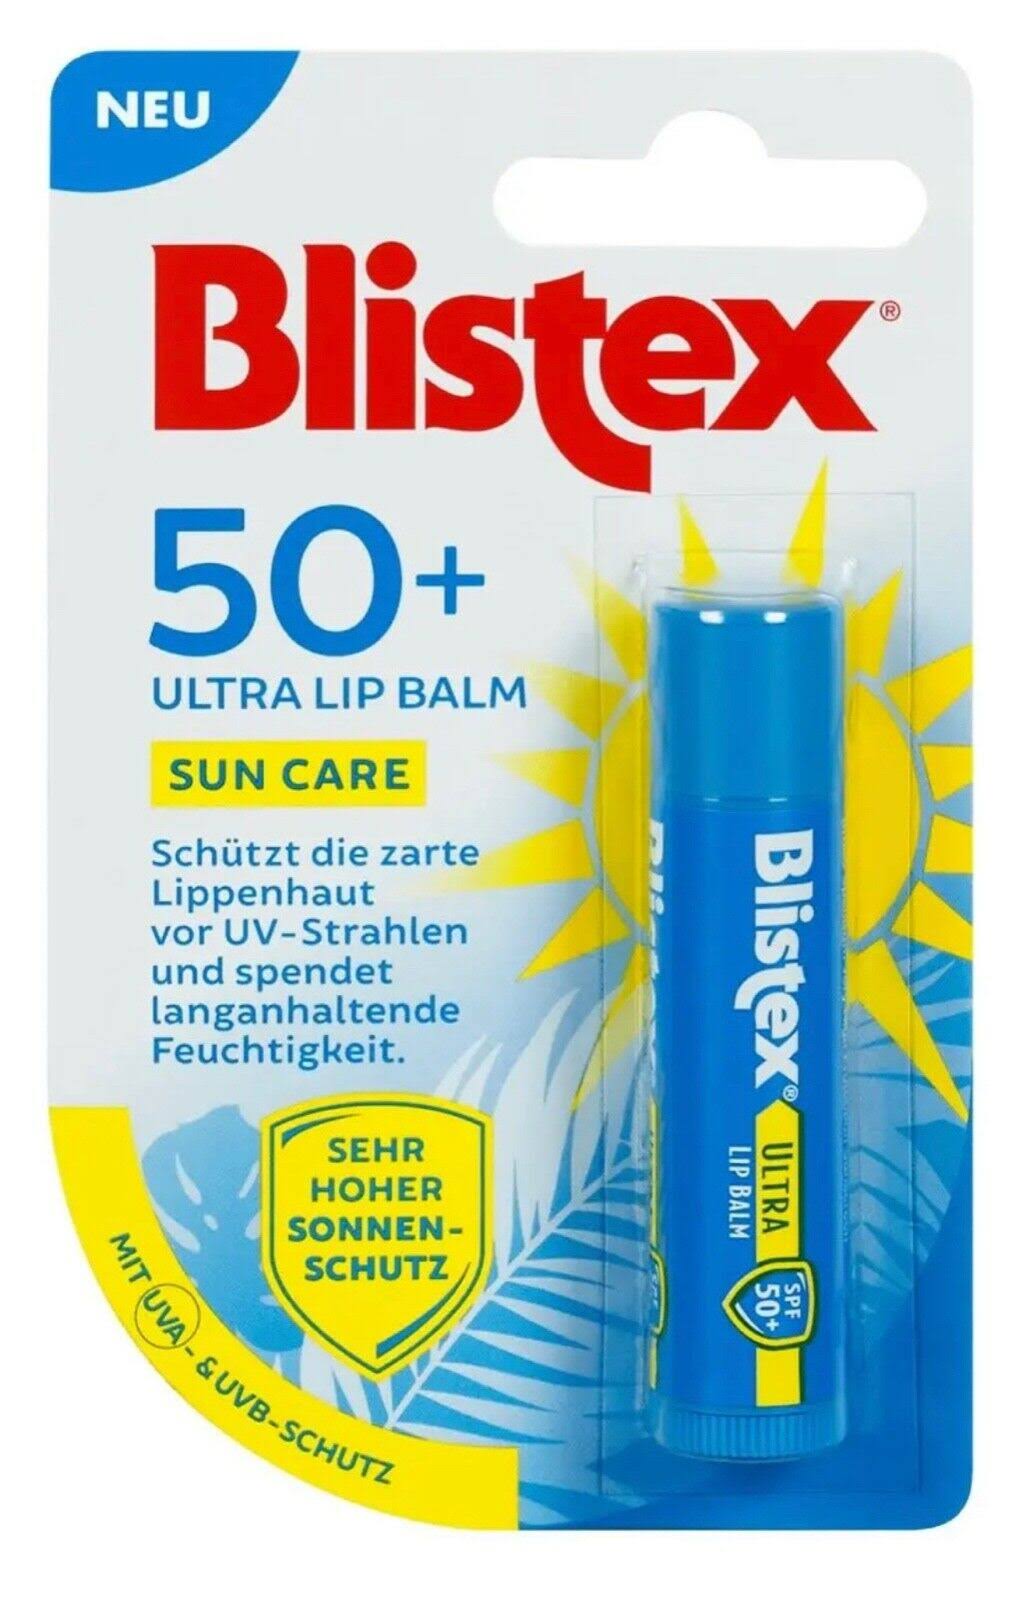 Blistex 50+ Ultra Lip Balm